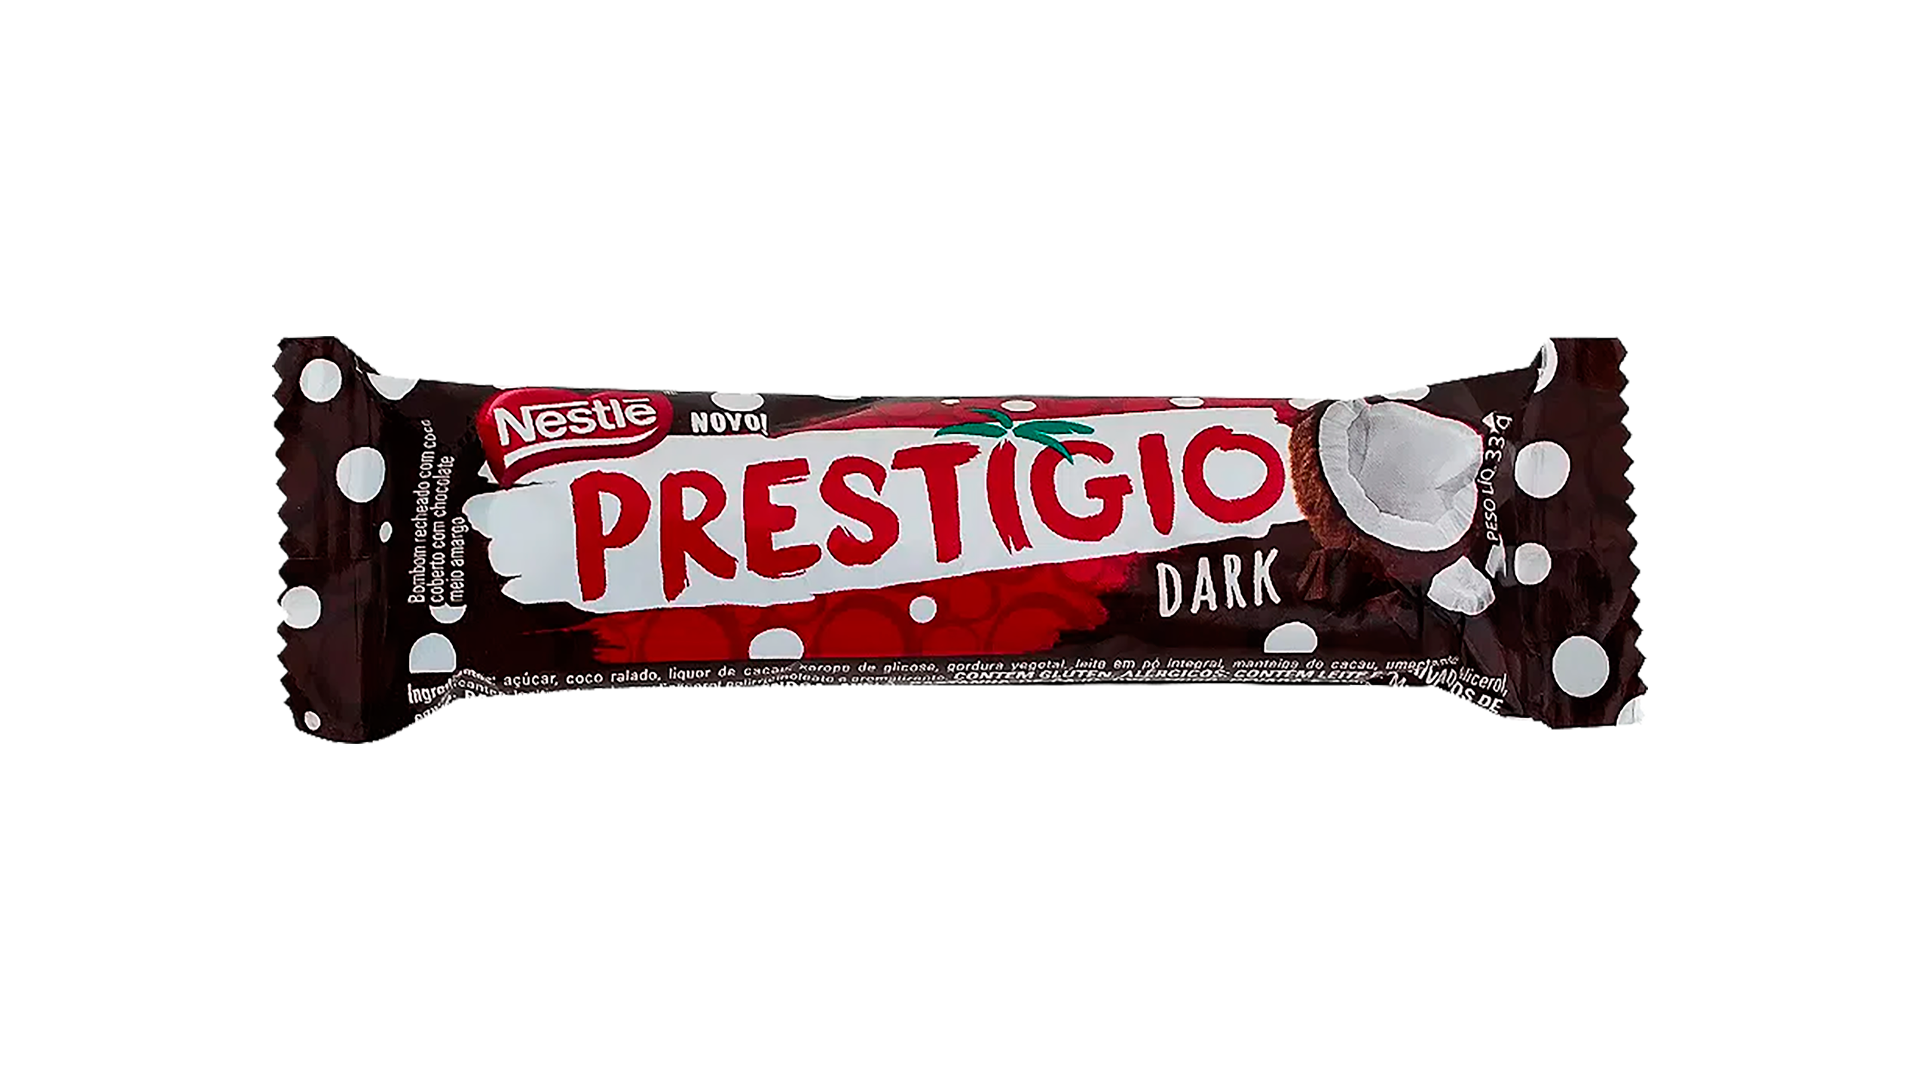 NESTLE - "Prestigio" DARK Chocolate Bar - 30g